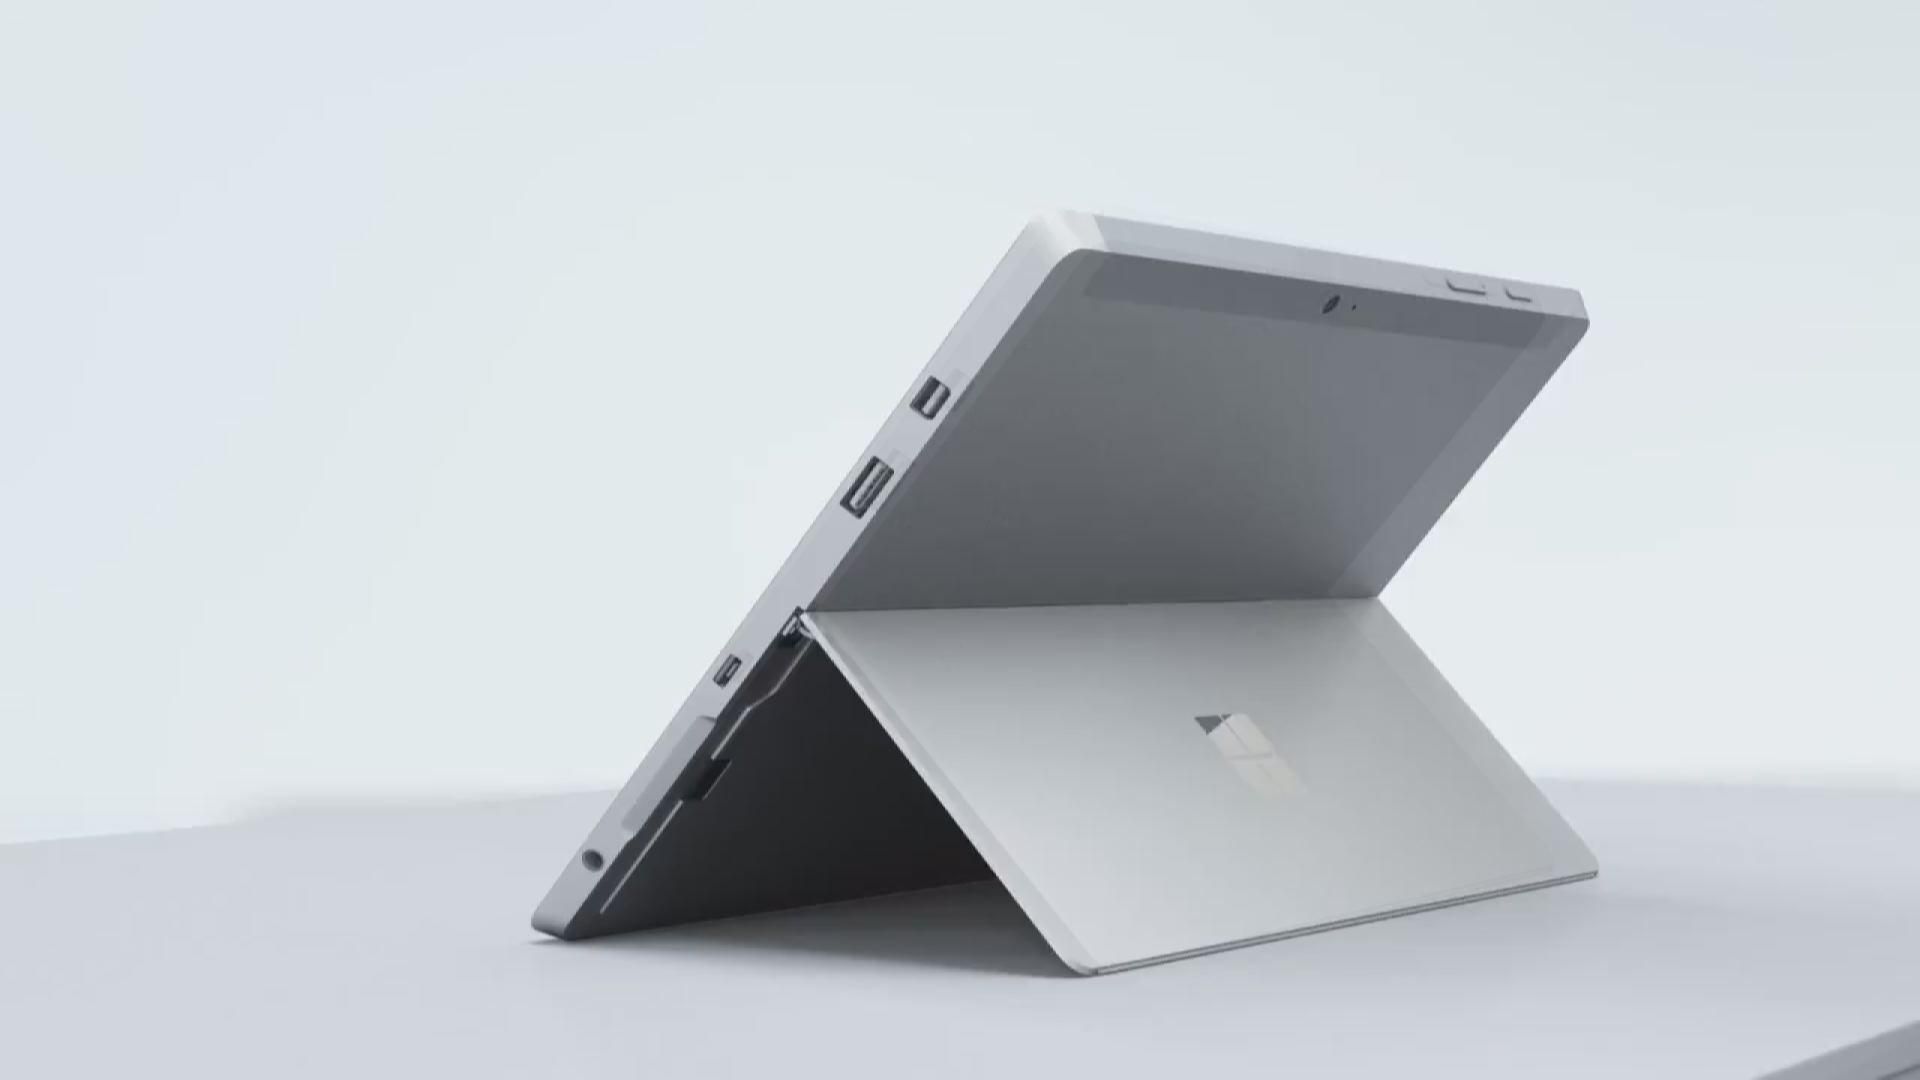 Компания Microsoft представила планшет Surface 3